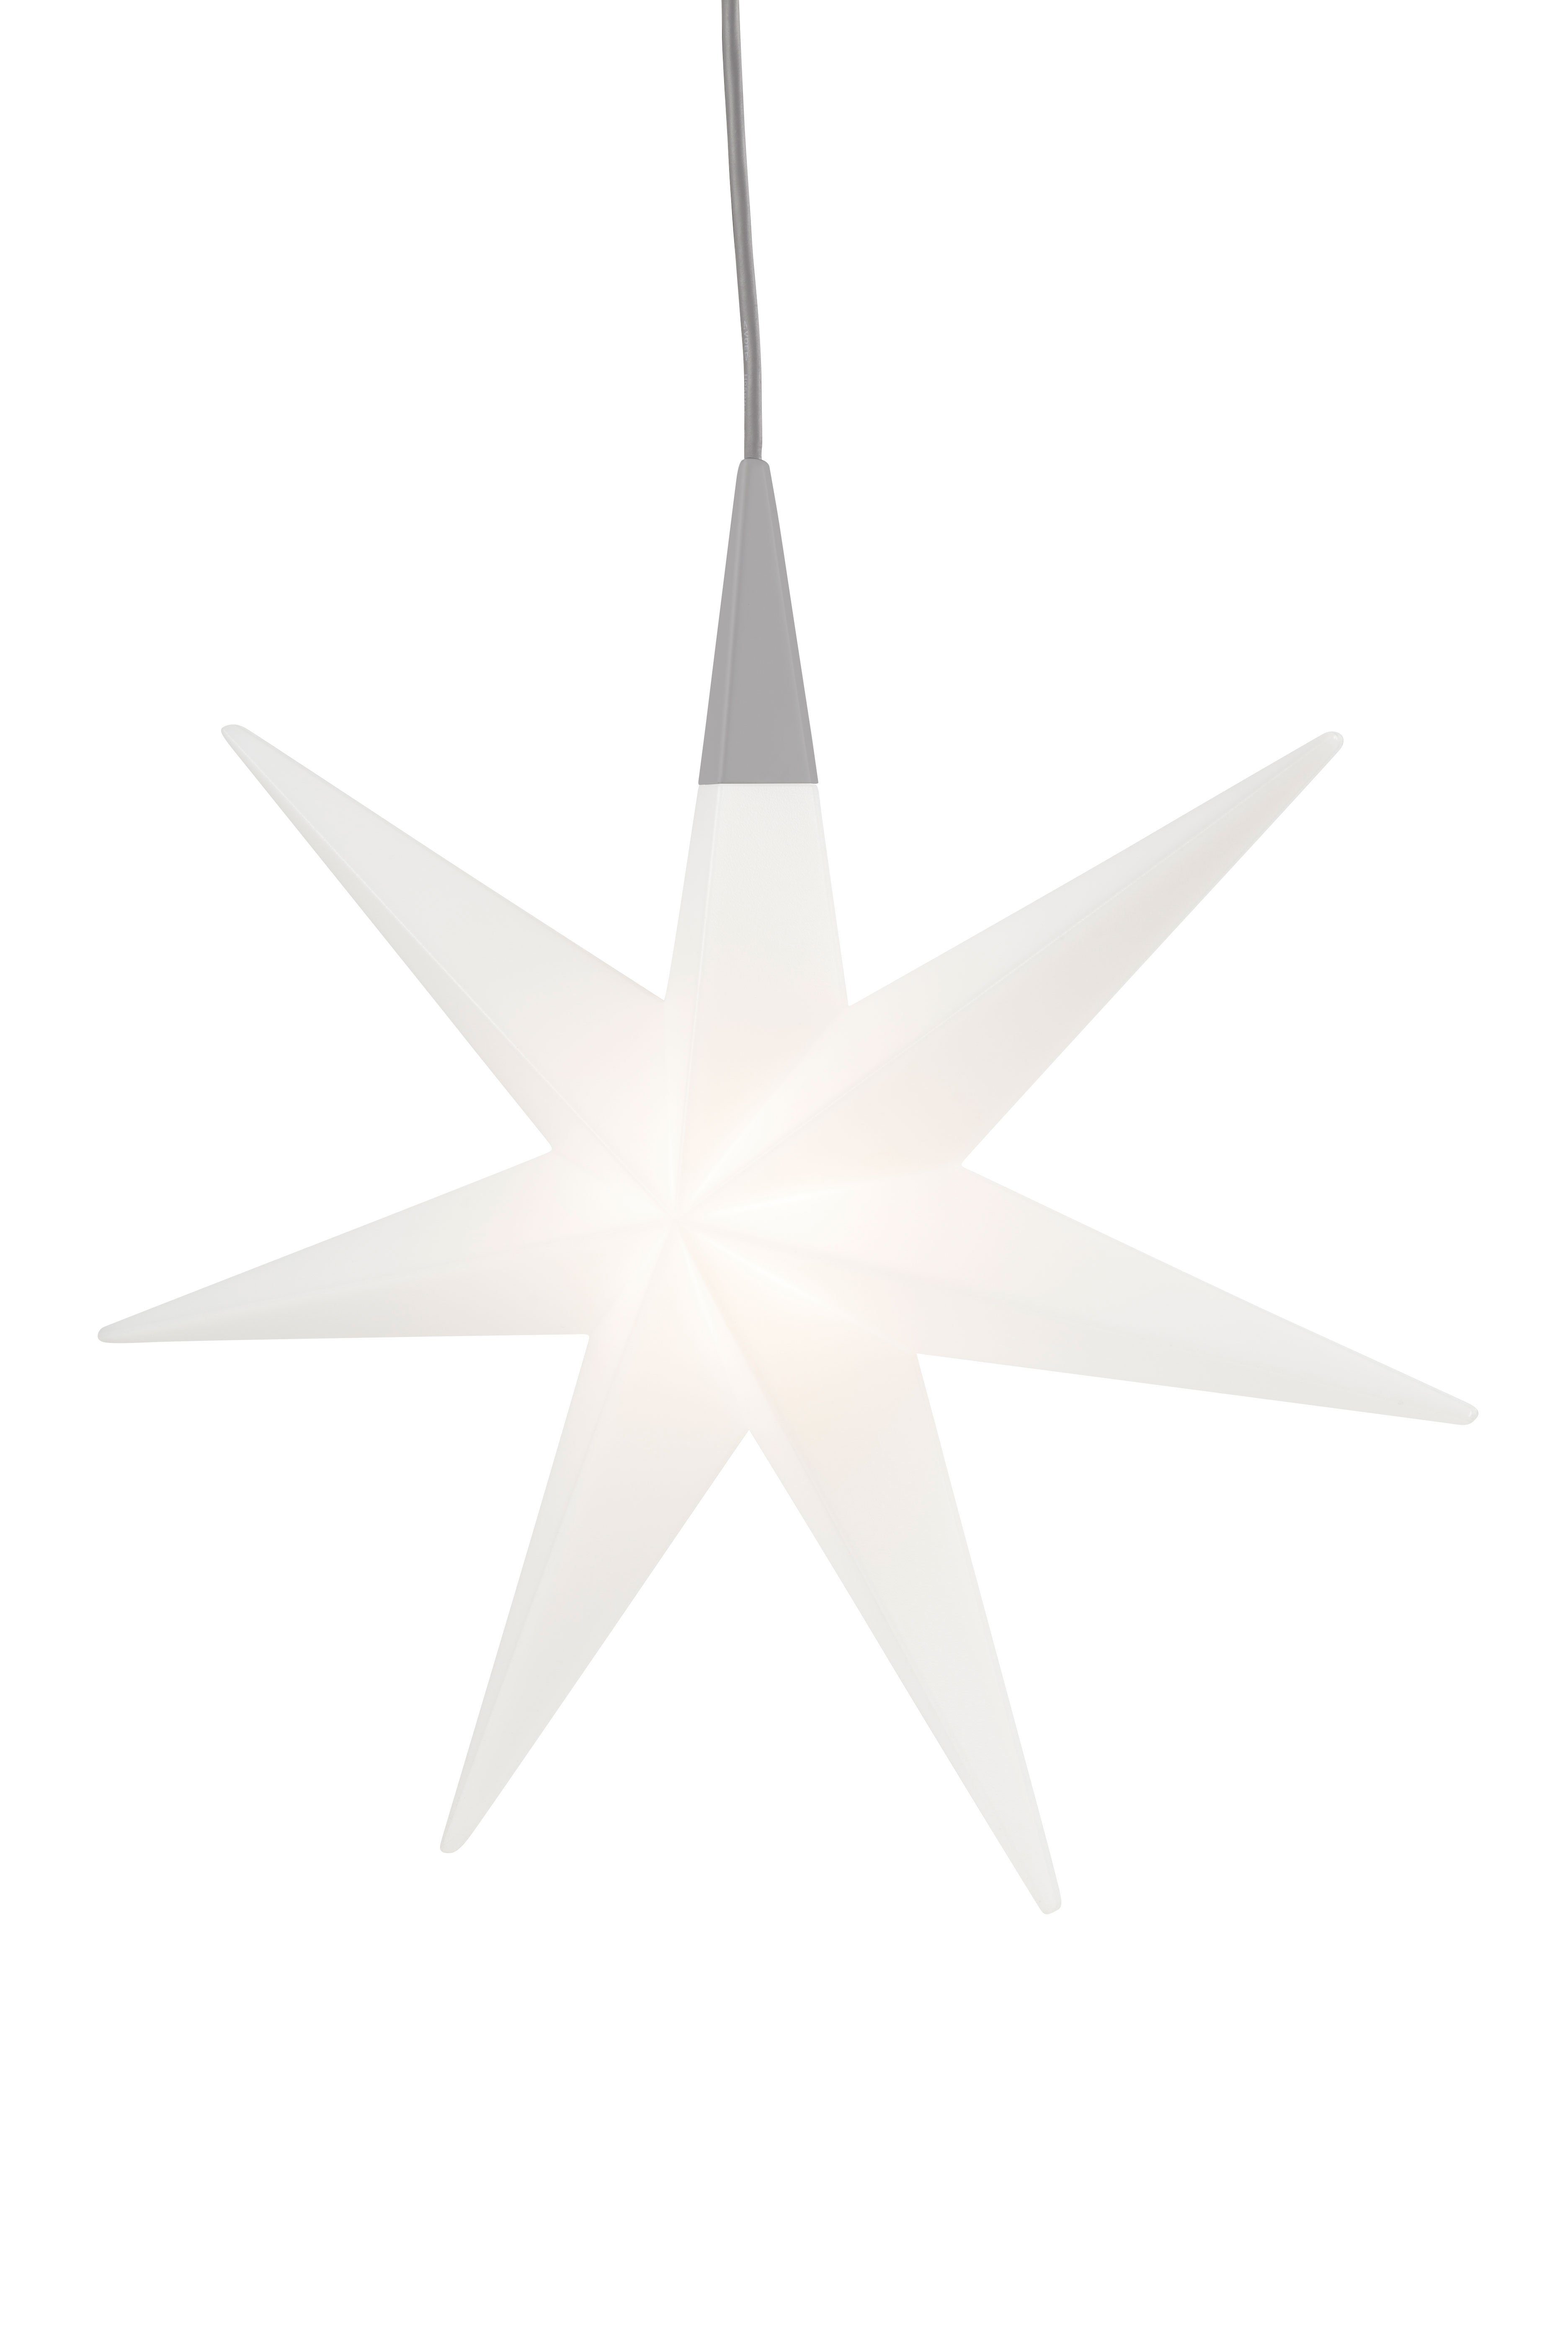 8 seasons design LED Stern Shining Glory Star, LED fest integriert, Warmweiß, 55 cm weiß für In- und Outdoor